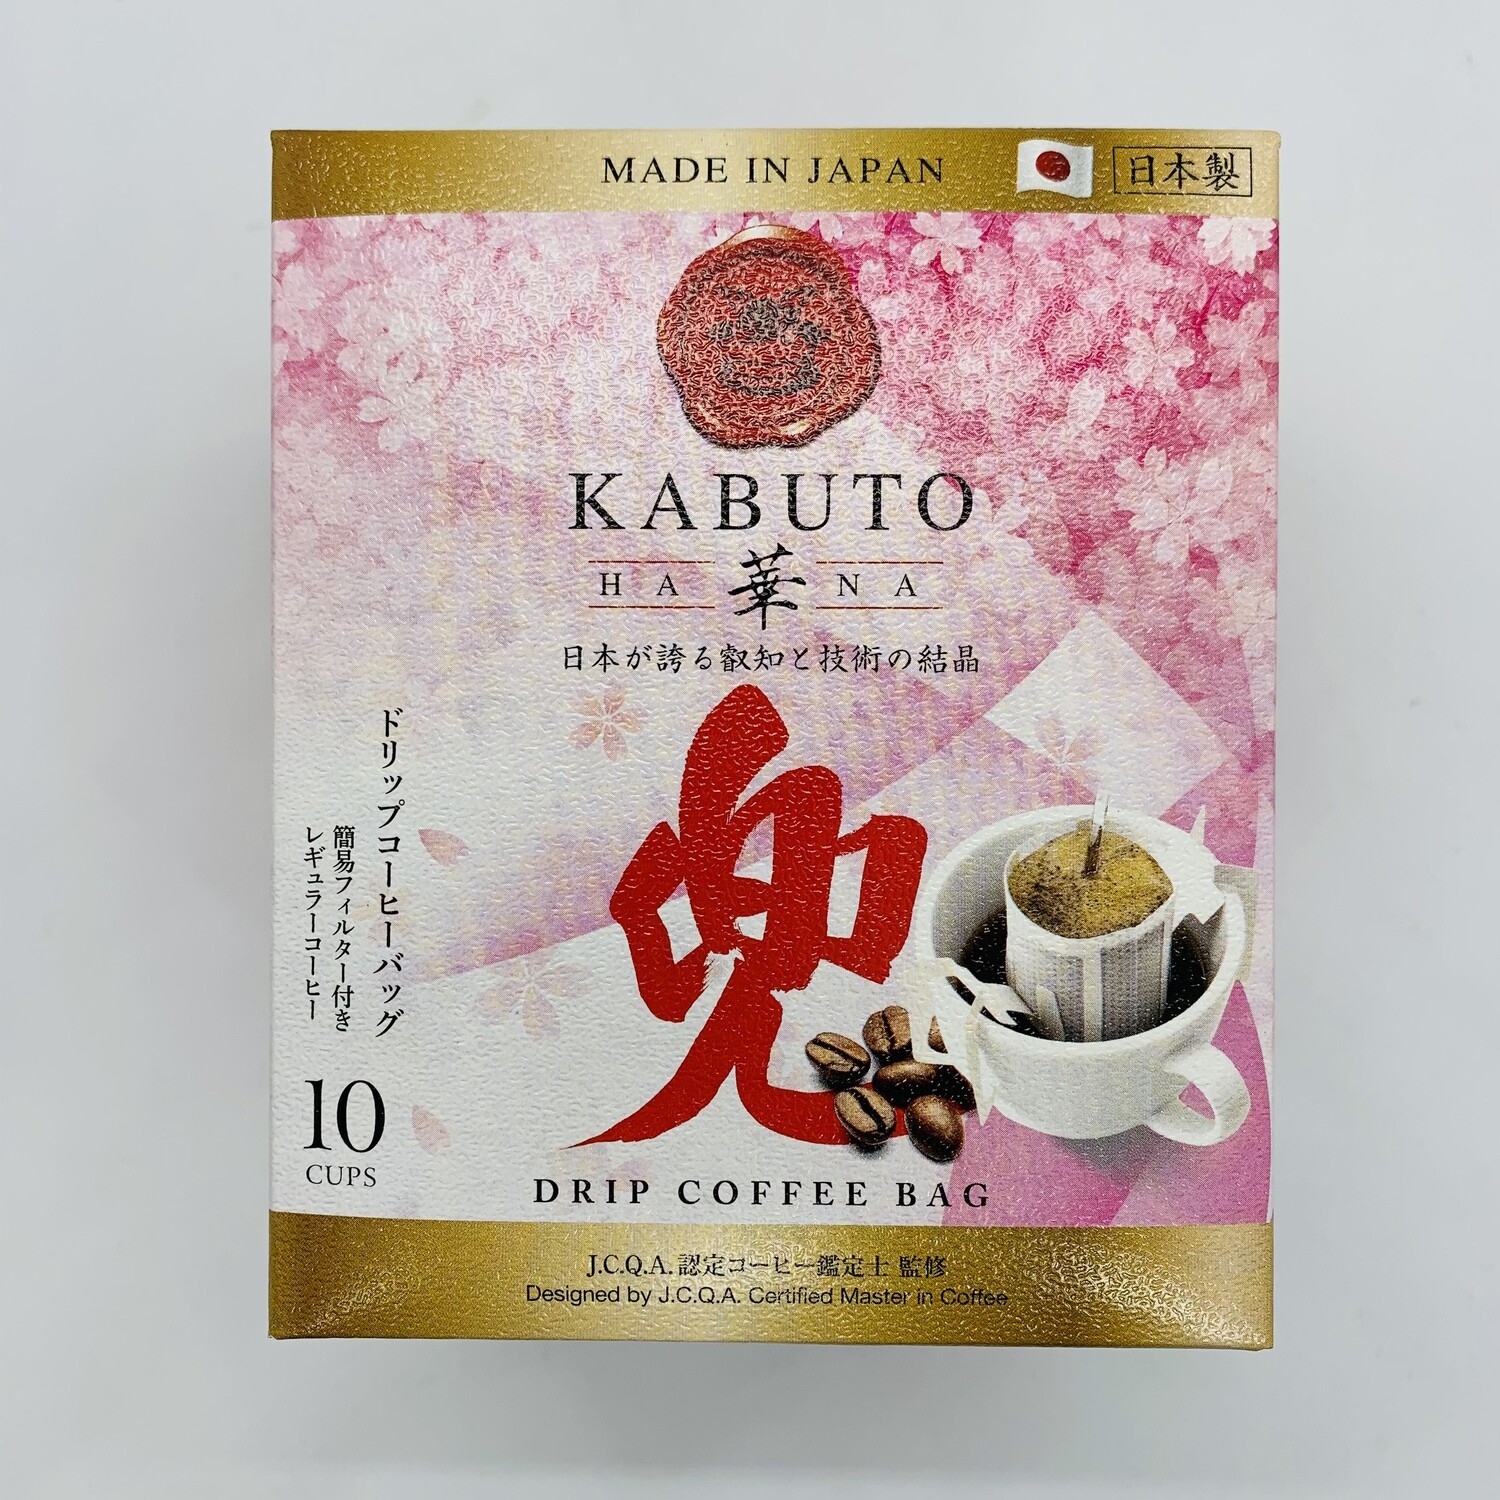 Kabuto red Drip coffee